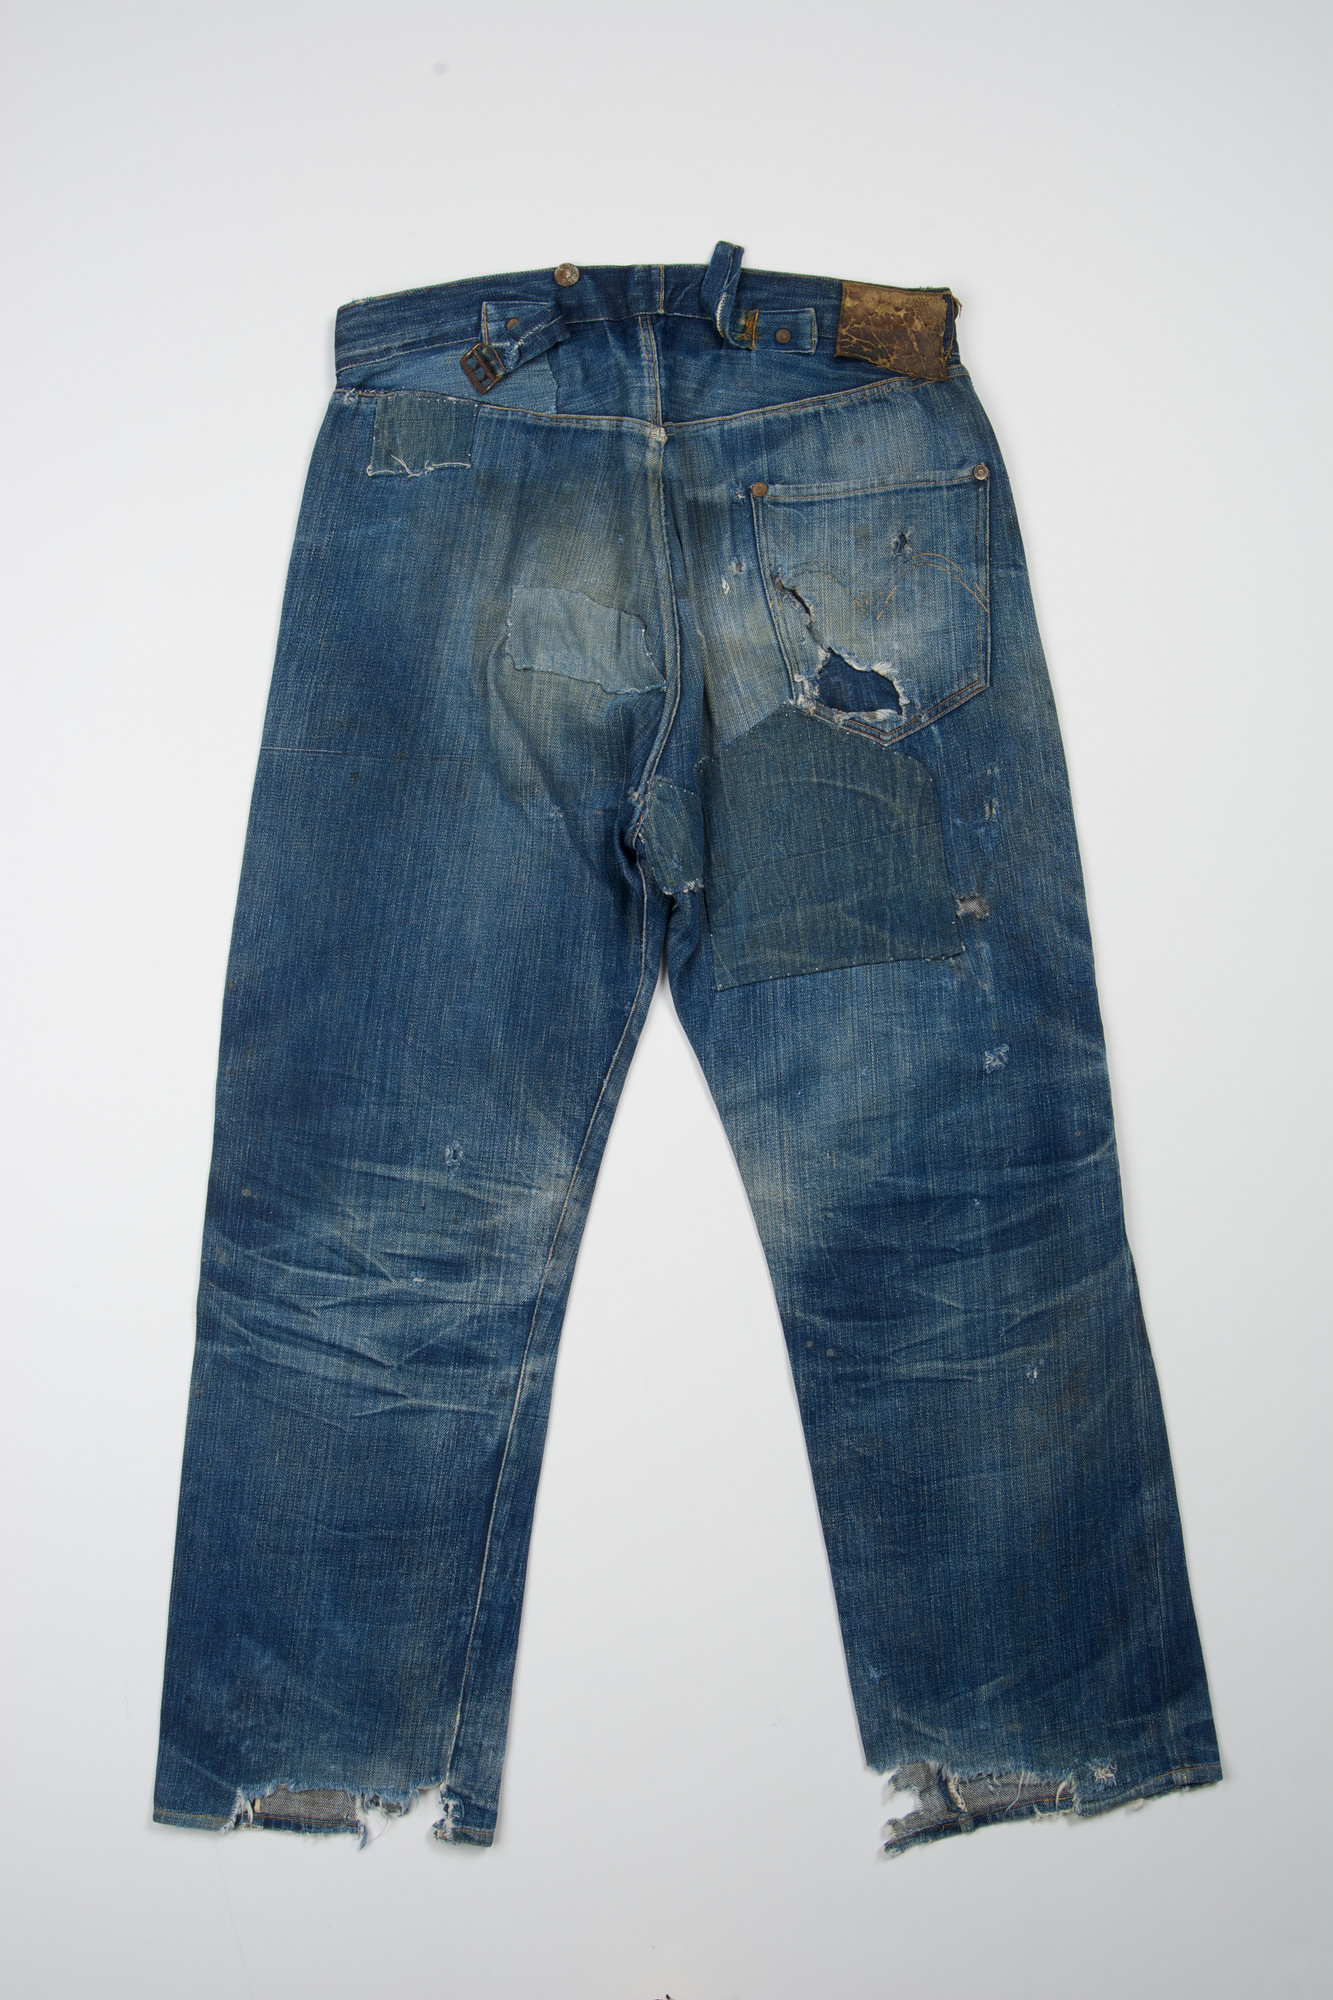 Levi Strauss \u0026 Co. Jeans. 1890 | MoMA